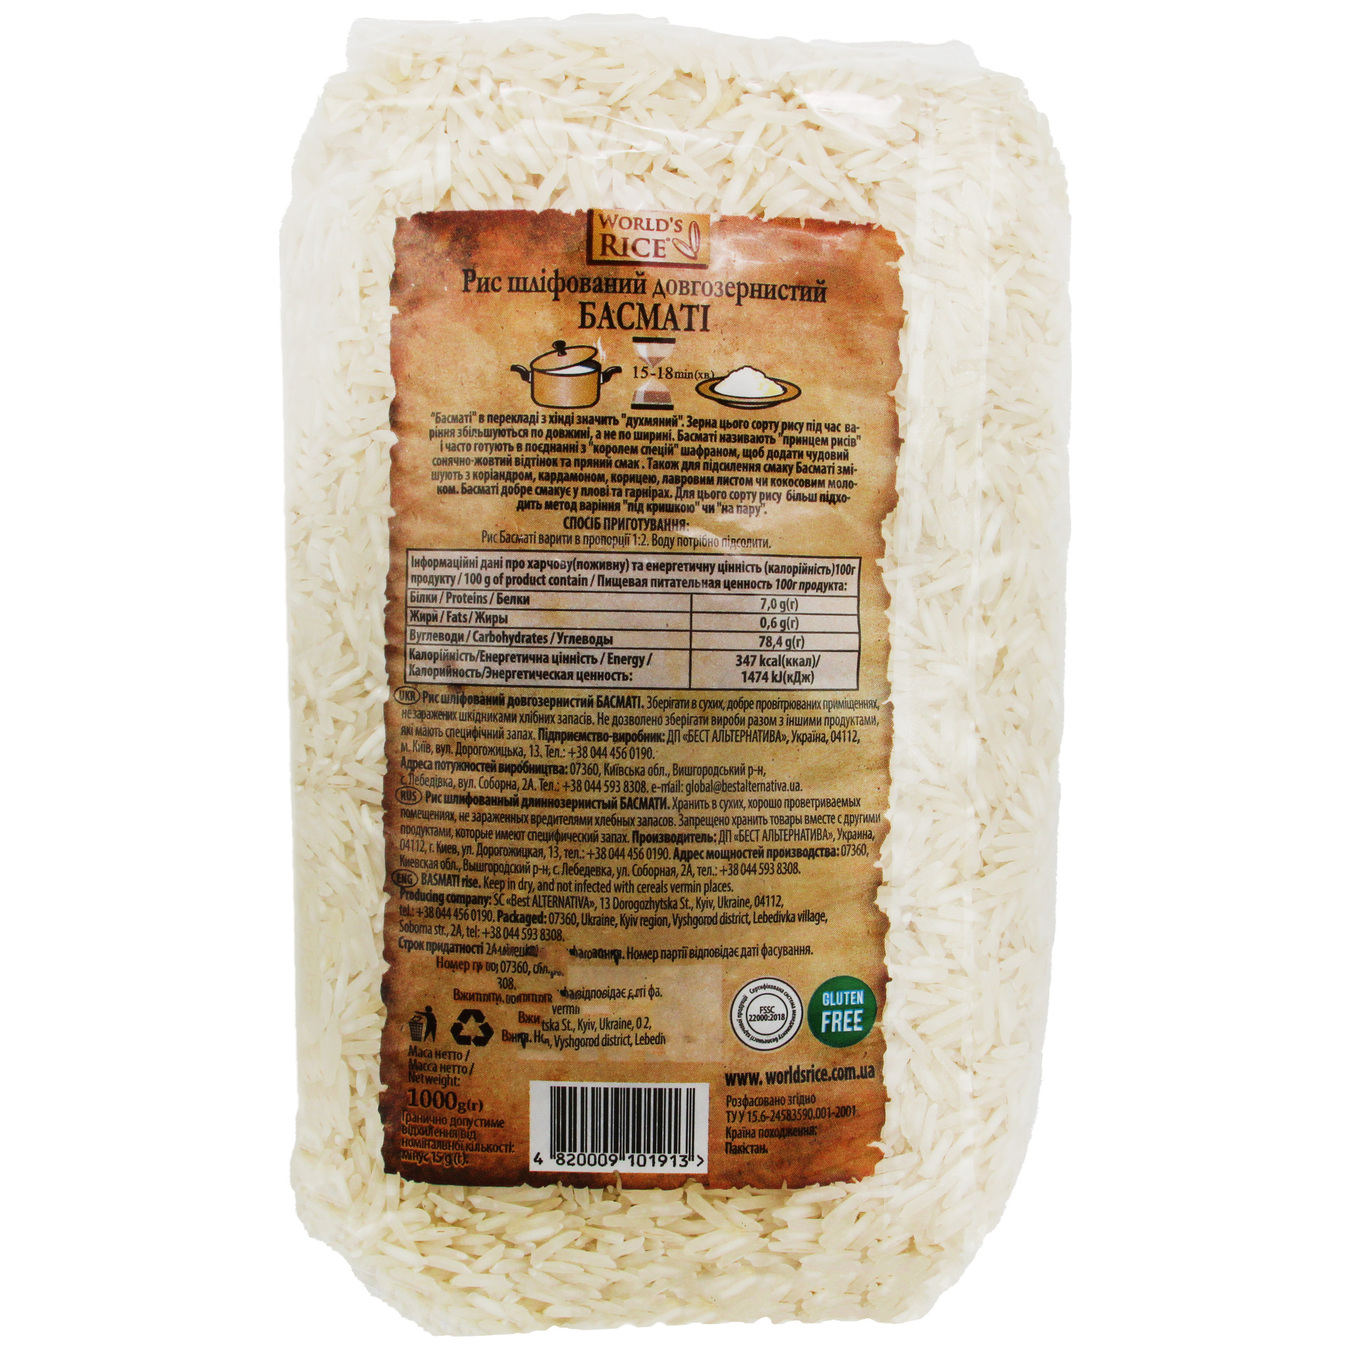 World's Rice Basmati Polished Long Grain Rice 1kg 2